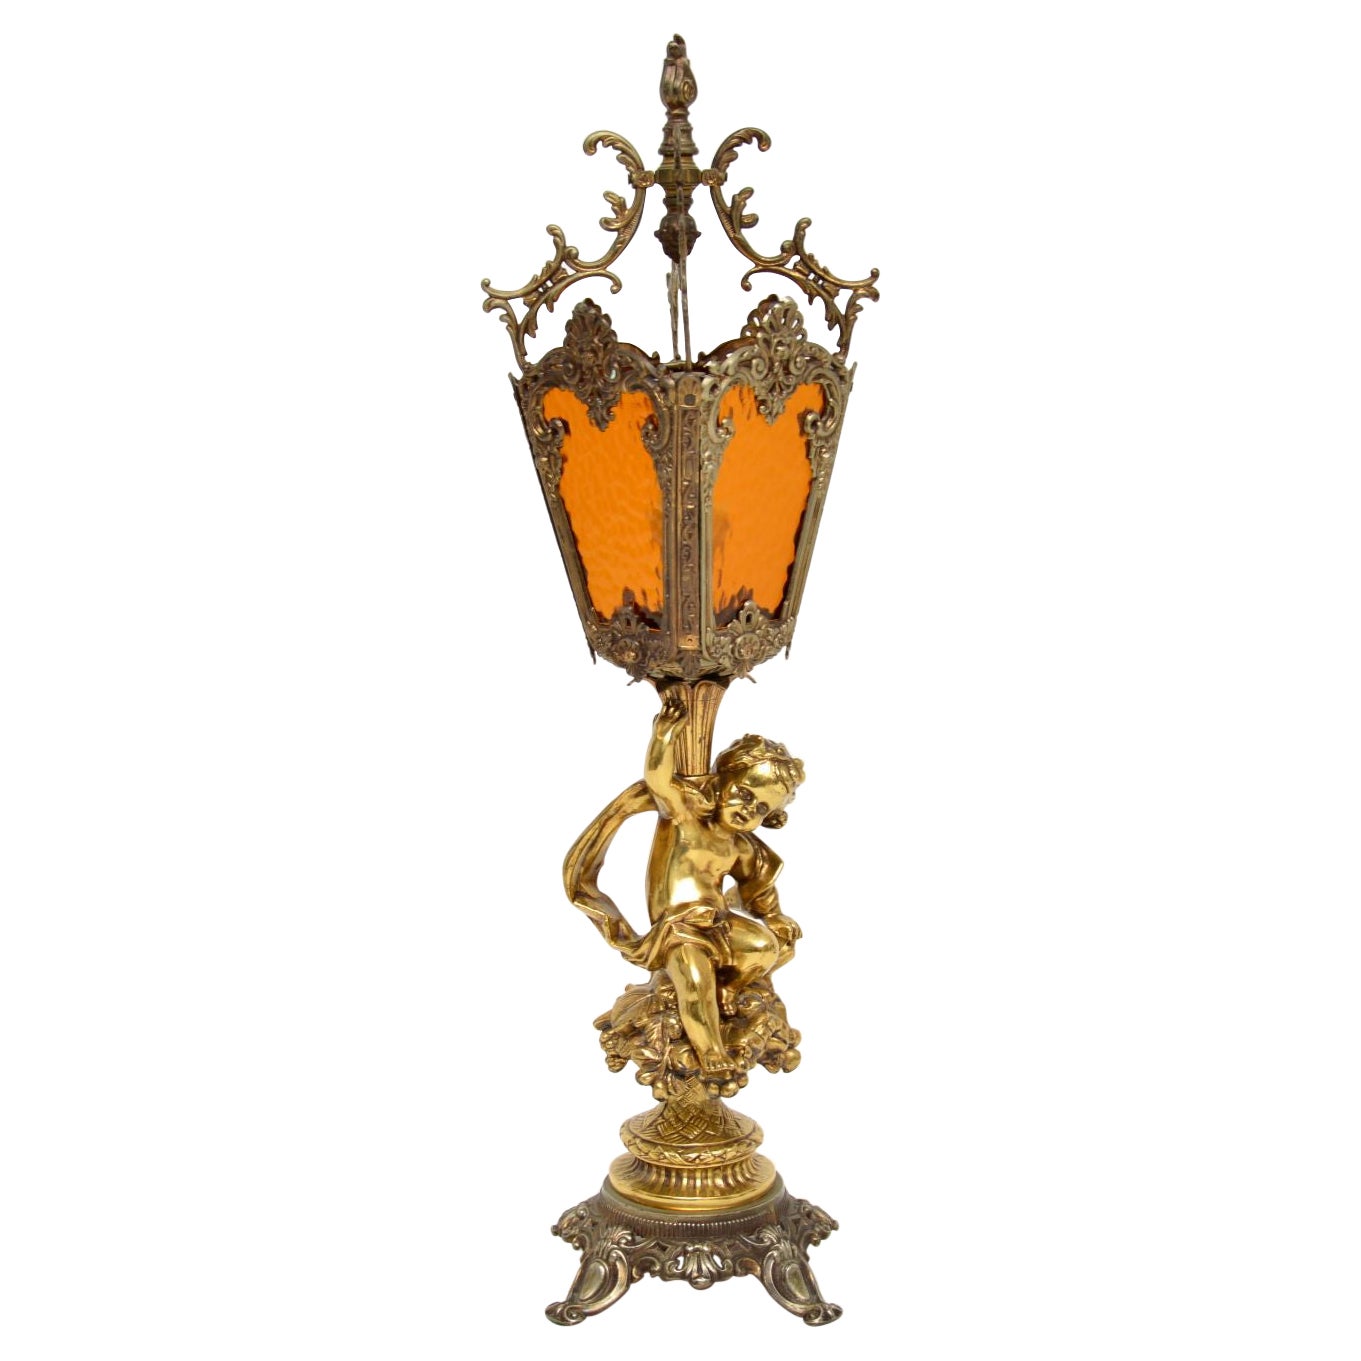 Antique French Gilt Metal & Glass Cherub Lamp